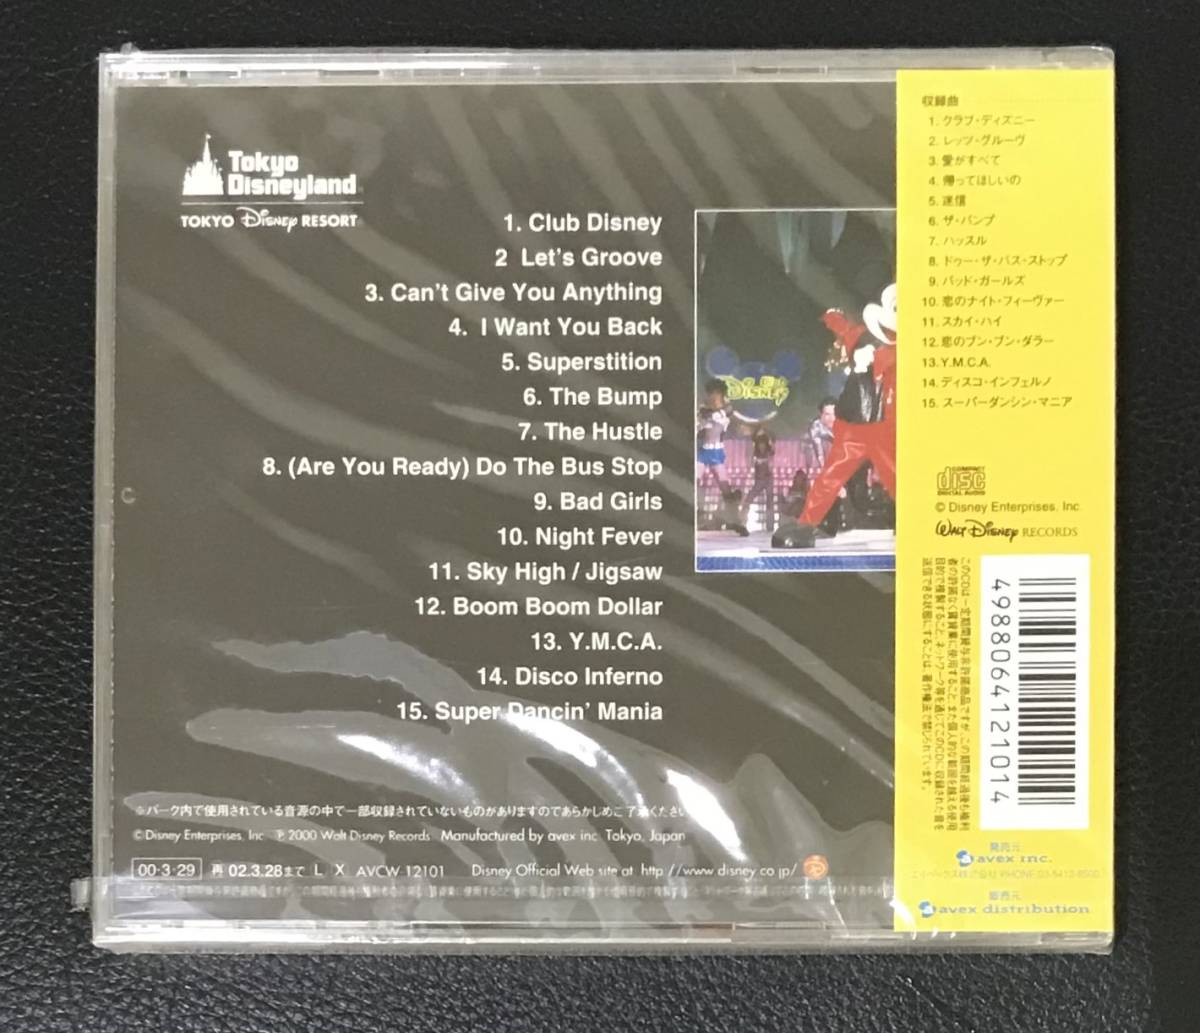  new goods unopened CD* Tokyo Disney Land.Club.Disney. super Dan sin* mania disco fi- bar..(2000/03/29)/AVCW12101..